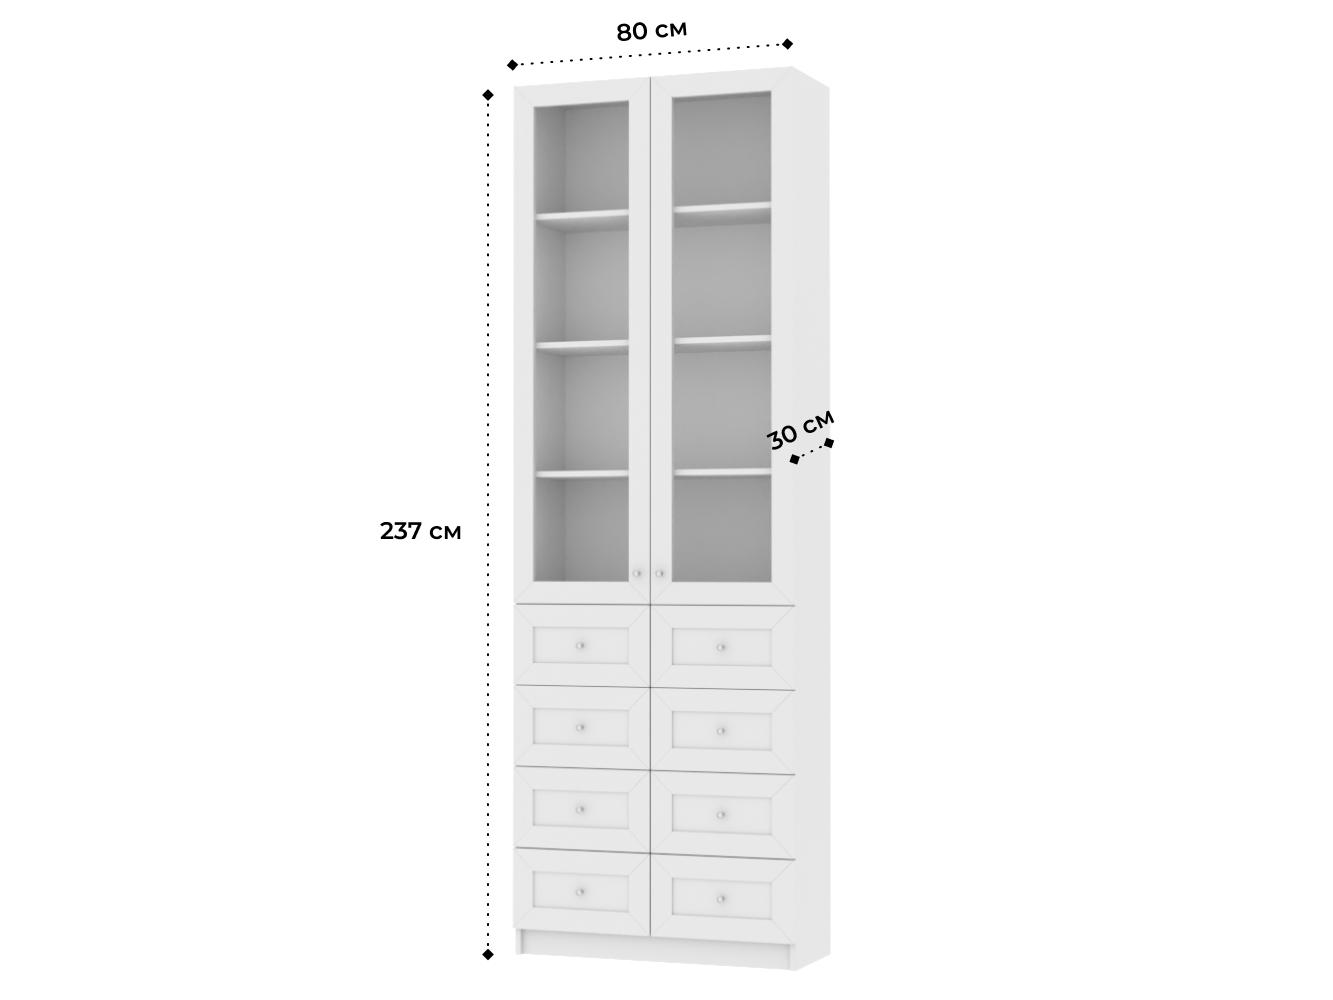 Книжный шкаф Билли 319 white ИКЕА (IKEA) изображение товара